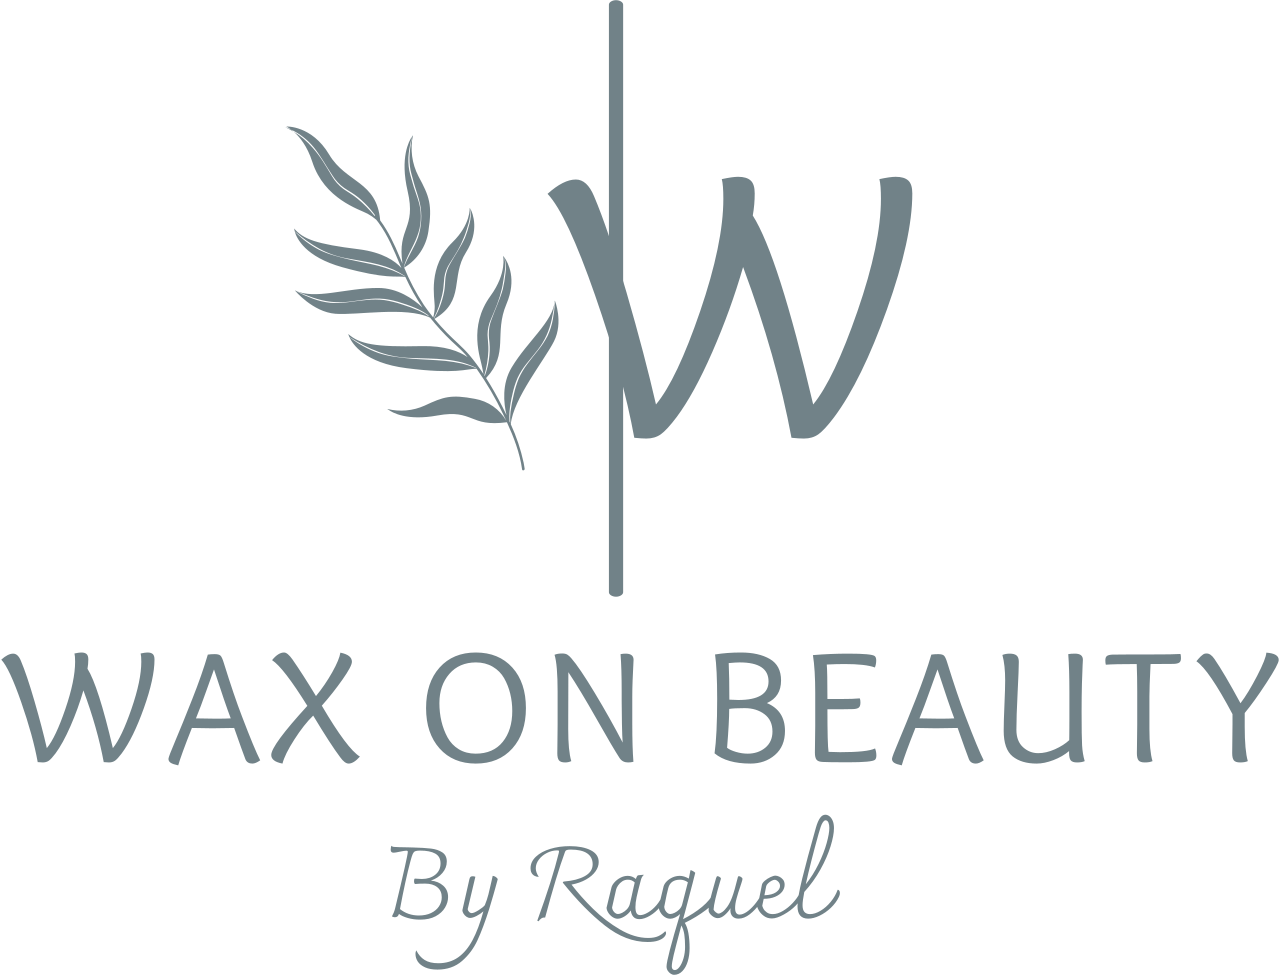 Wax On Beauty's web page